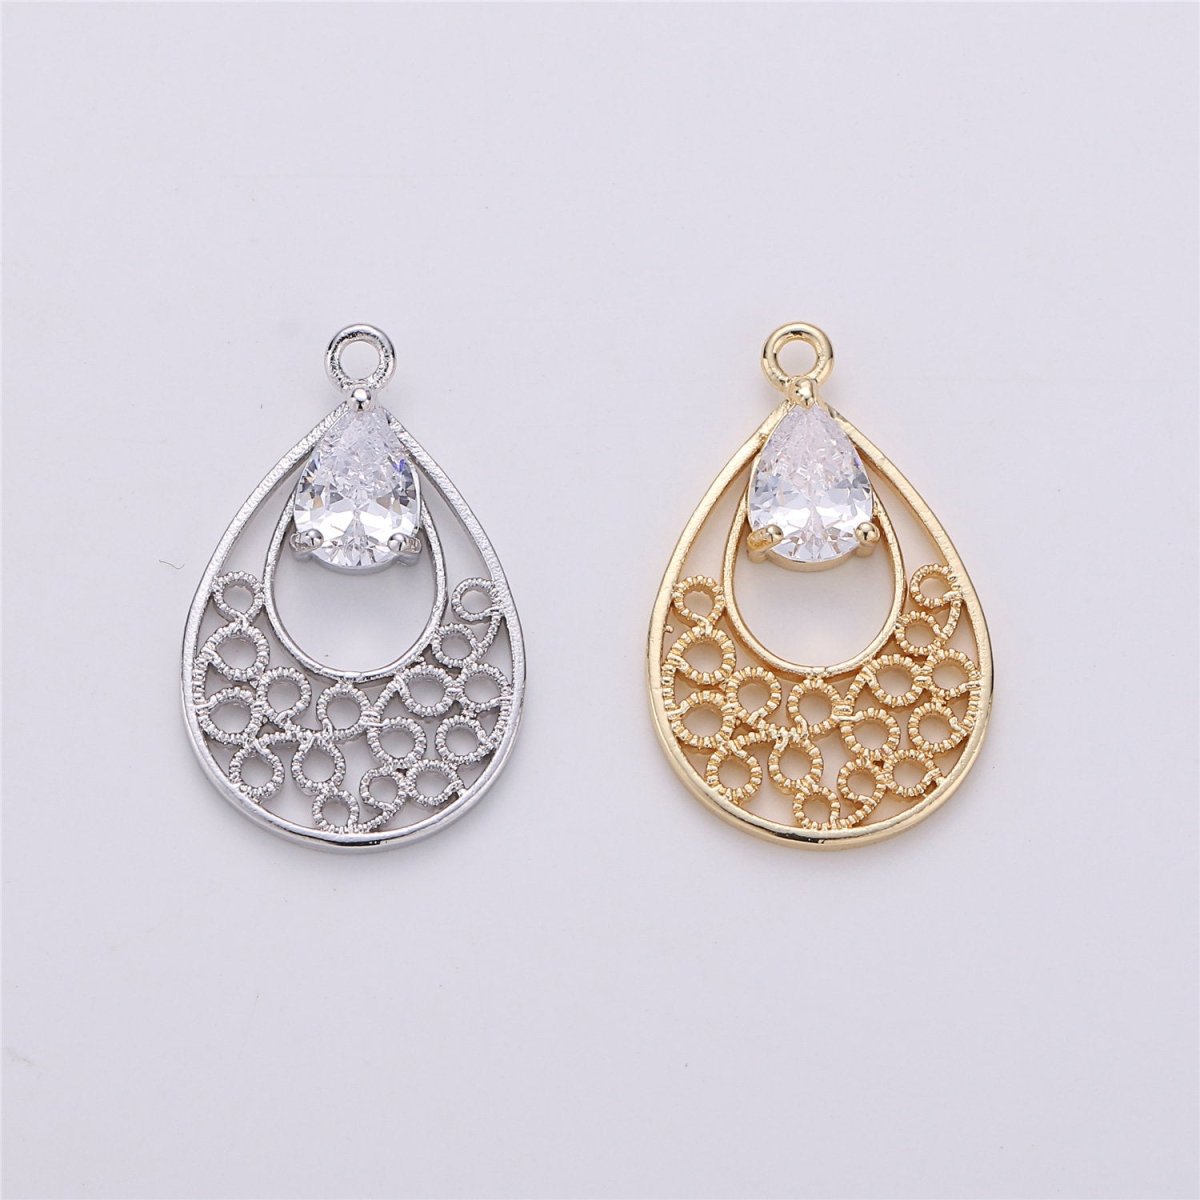 Gold filigree teardrop pendant, Necklace Charm earring components, filigree Pendant, dangles, matte gold, tear drop dangles - DLUXCA